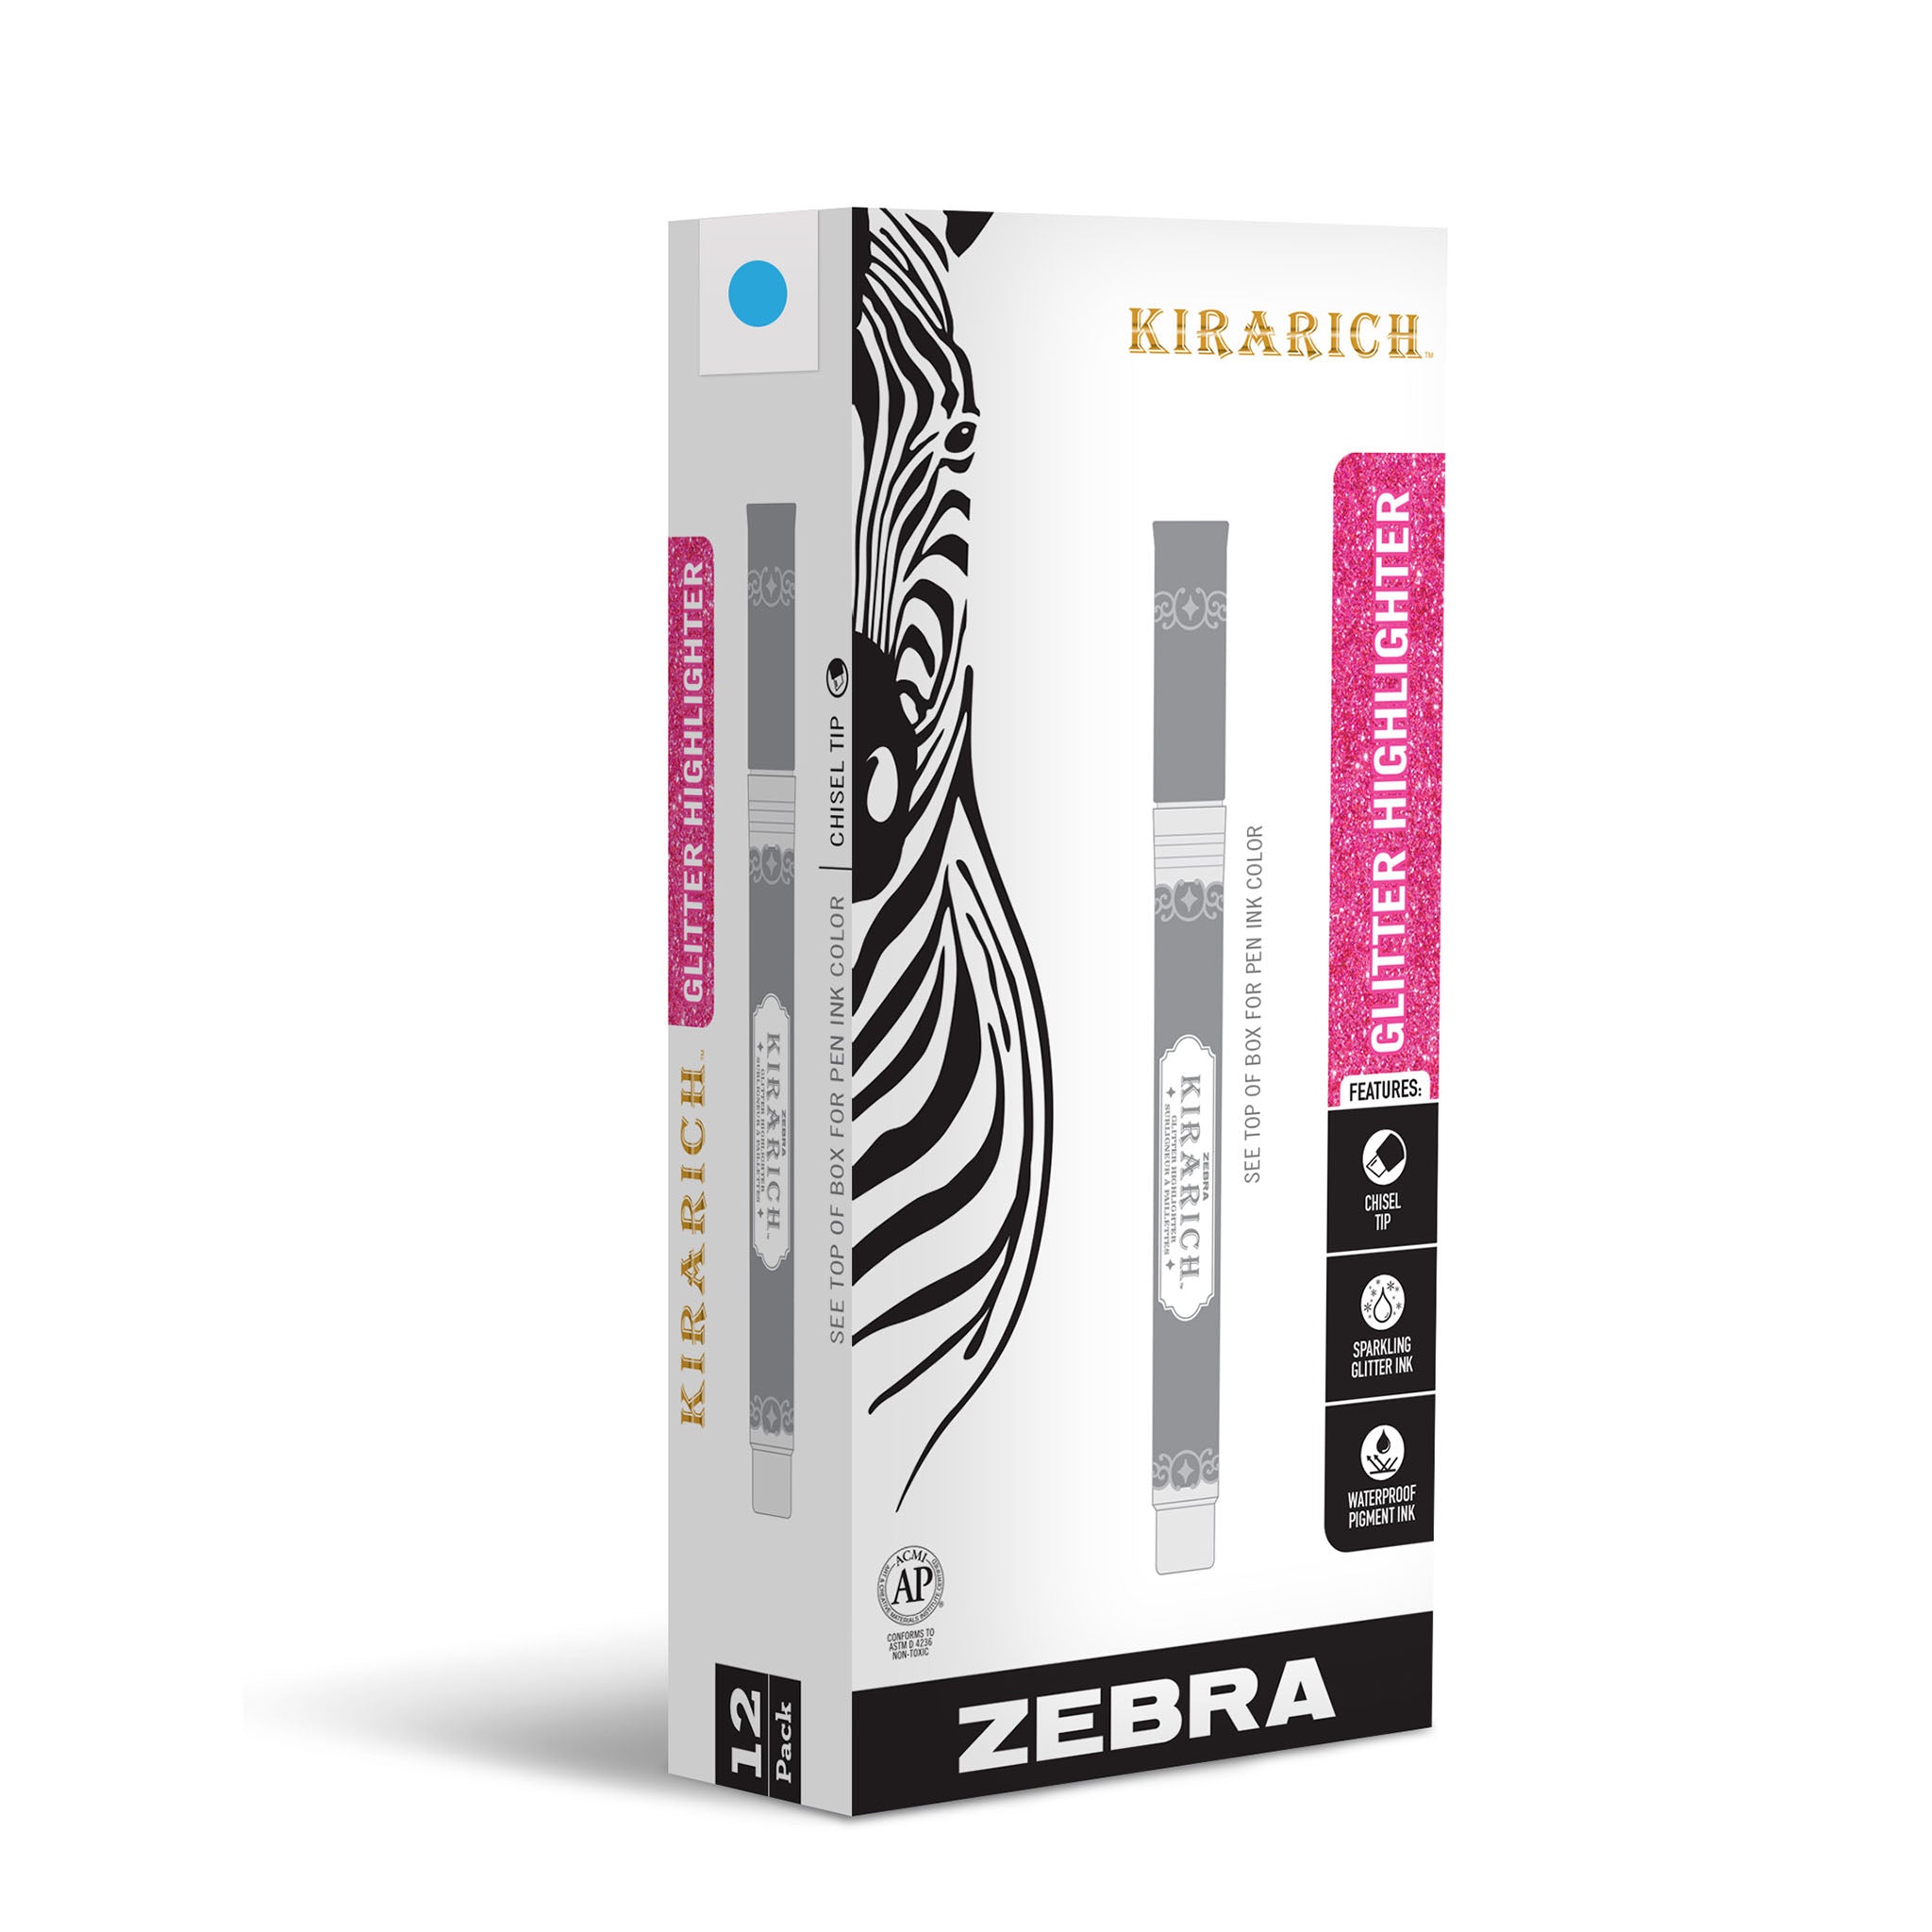 Zebra Kirarich Glitter Highlighters